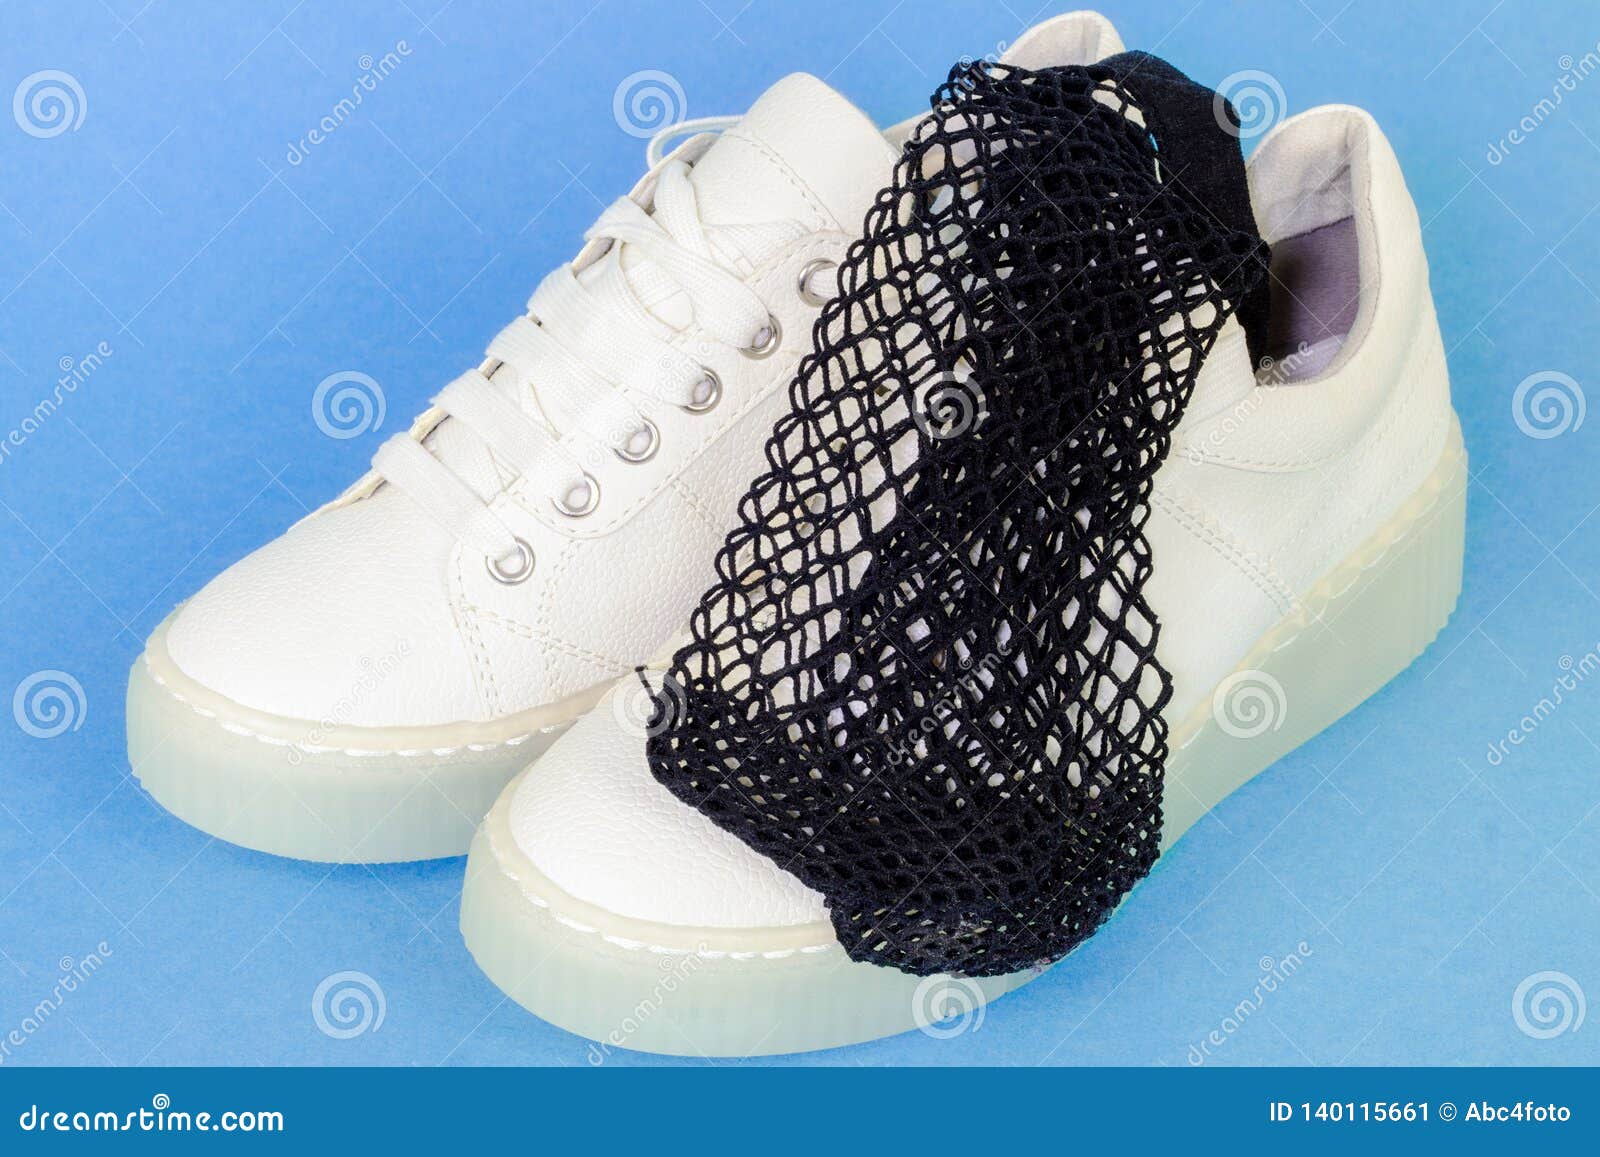 fishnet socks and sneakers